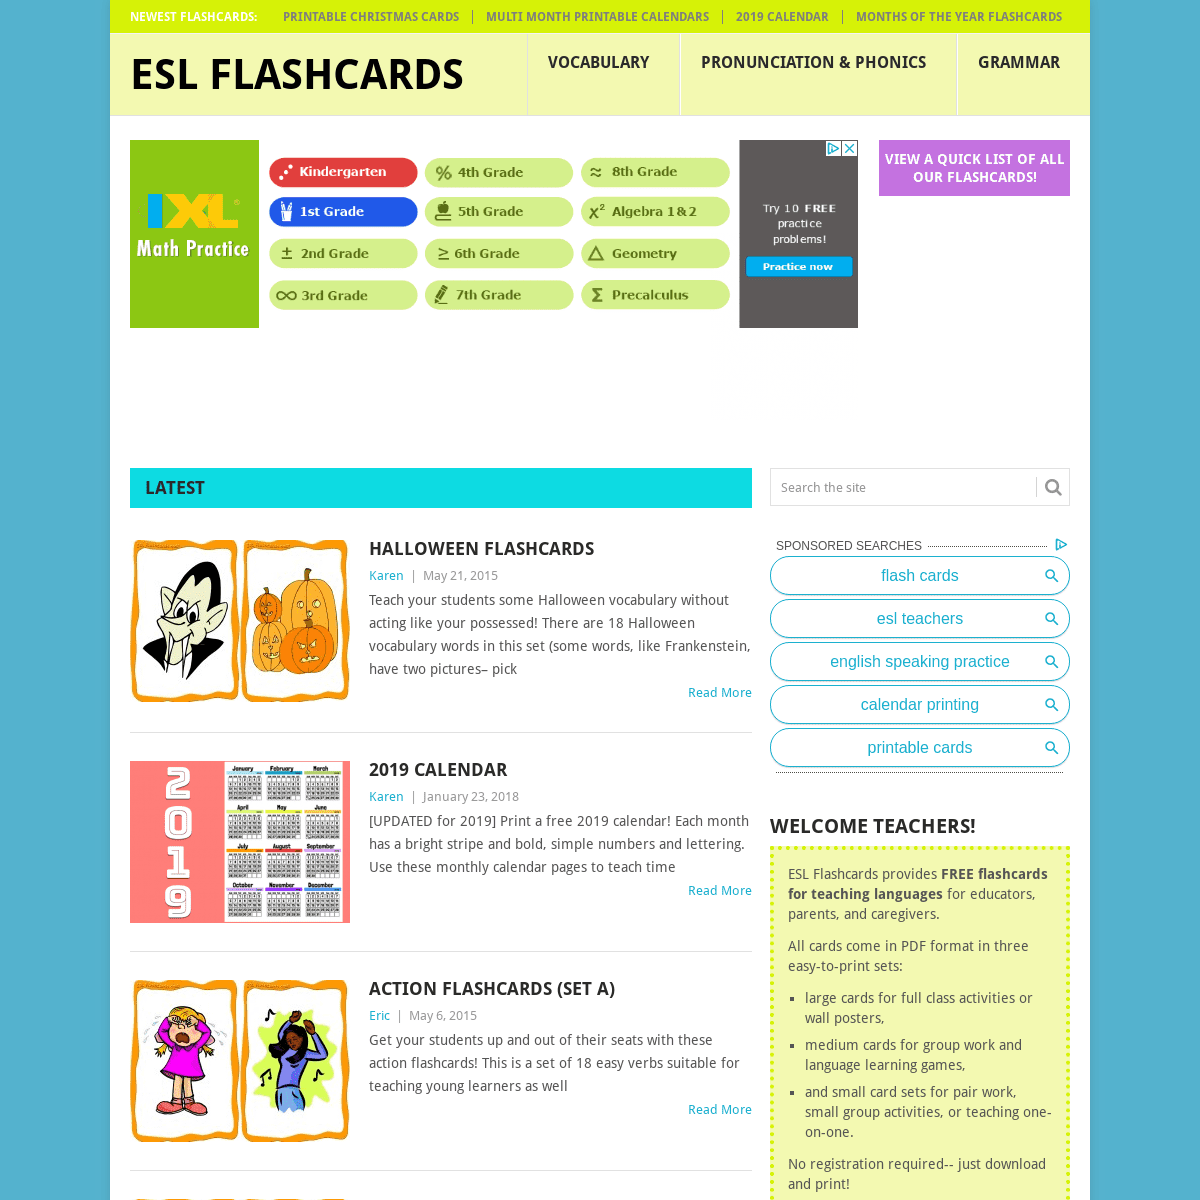 A complete backup of eslflashcards.com